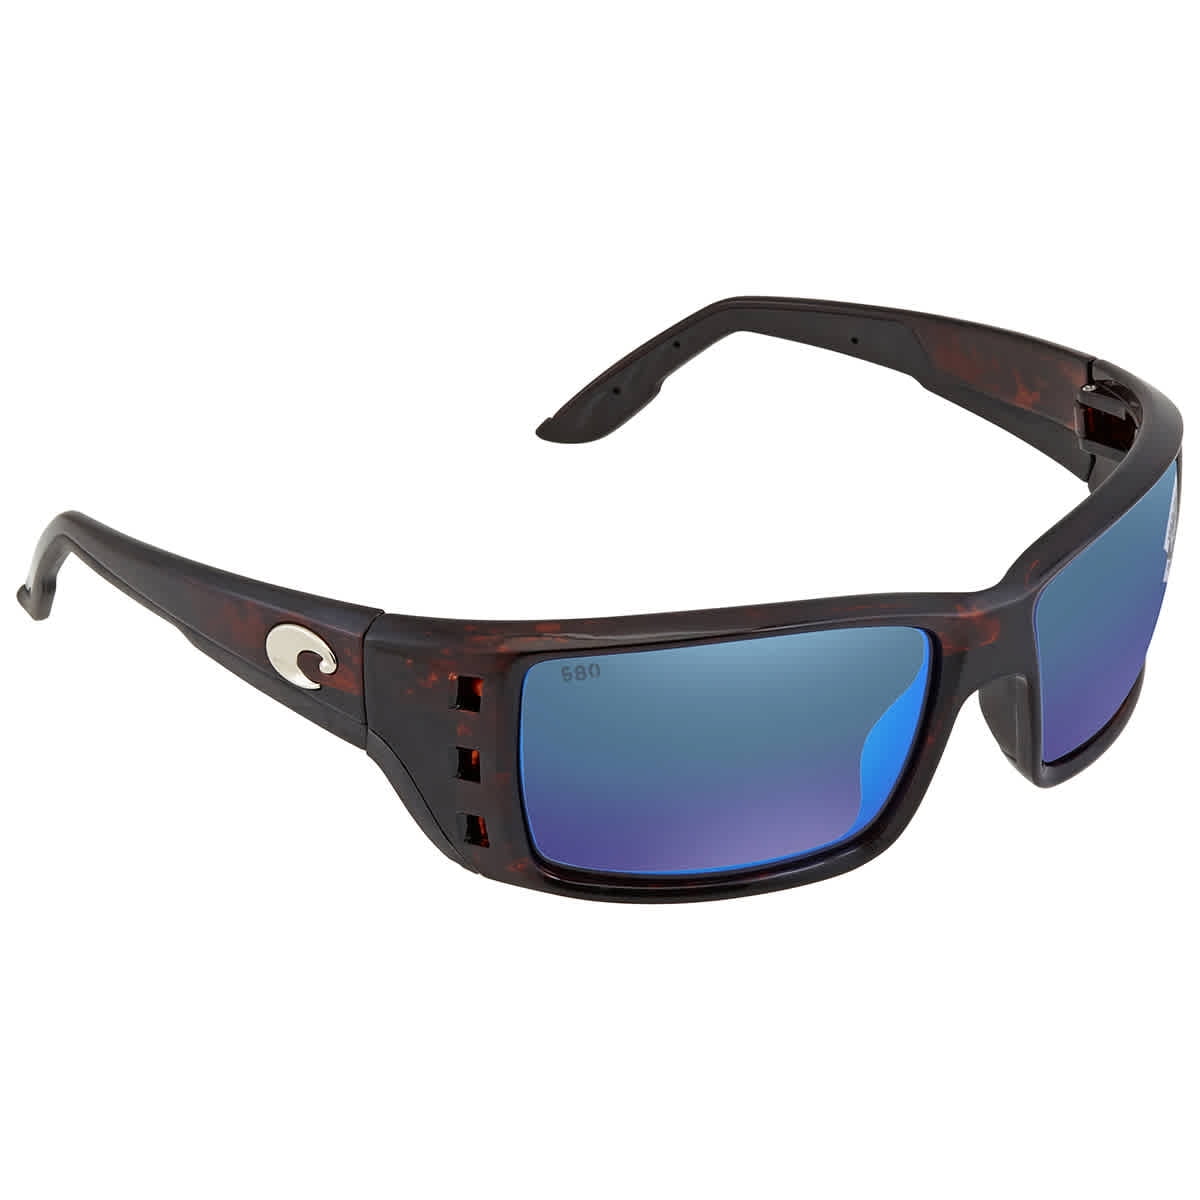 Permit Tortoise Rectangular Sunglasses Blue Lens 580G - Walmart.com